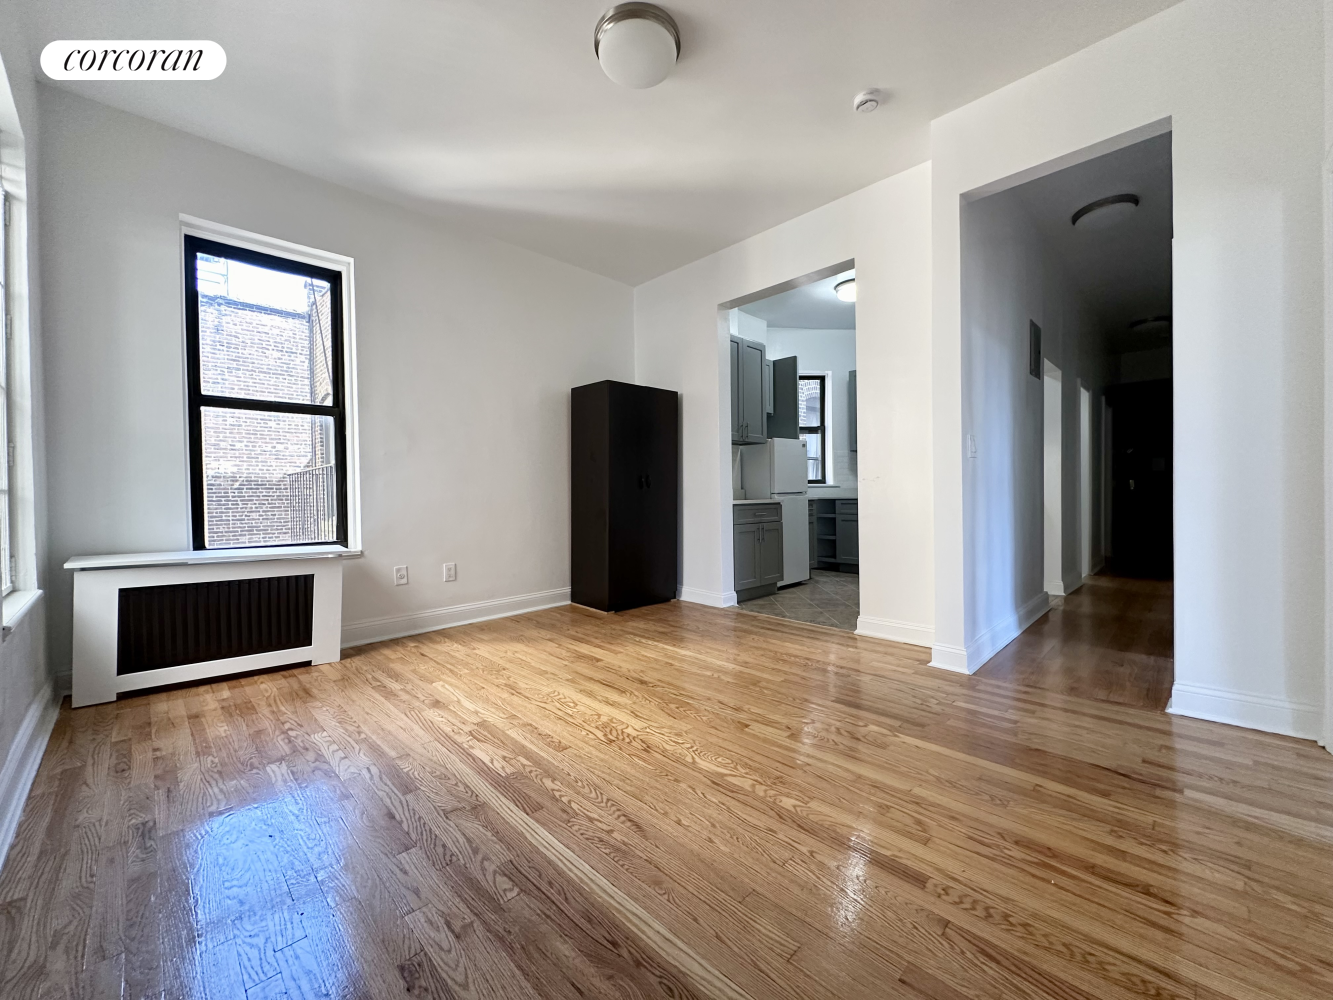 201 West 106th Street 10, Upper West Side, Upper West Side, NYC - 3 Bedrooms  
1 Bathrooms  
5 Rooms - 